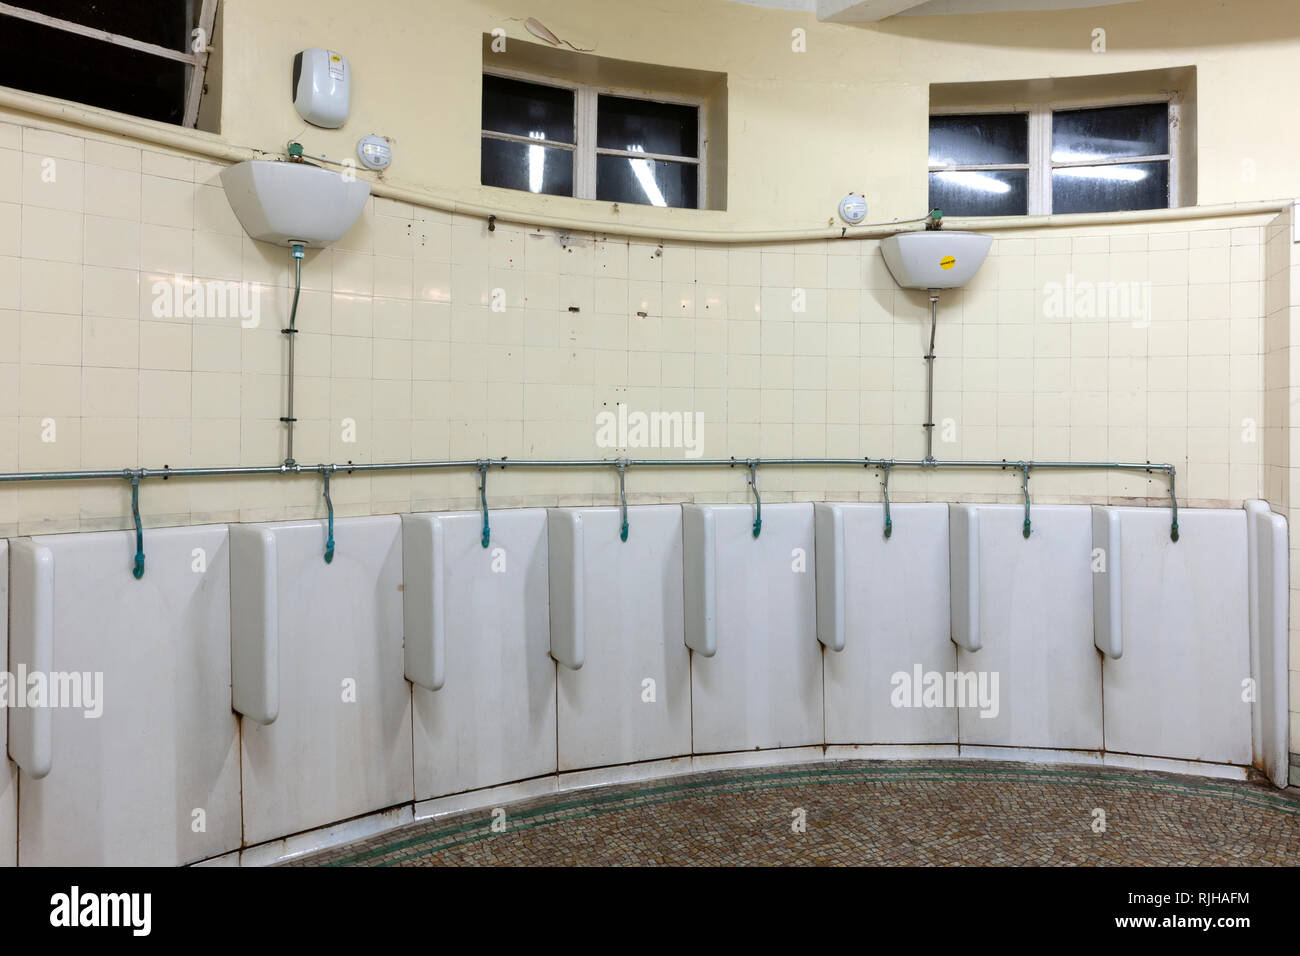 Fila de caballeros baño público urinarios. Foto de stock